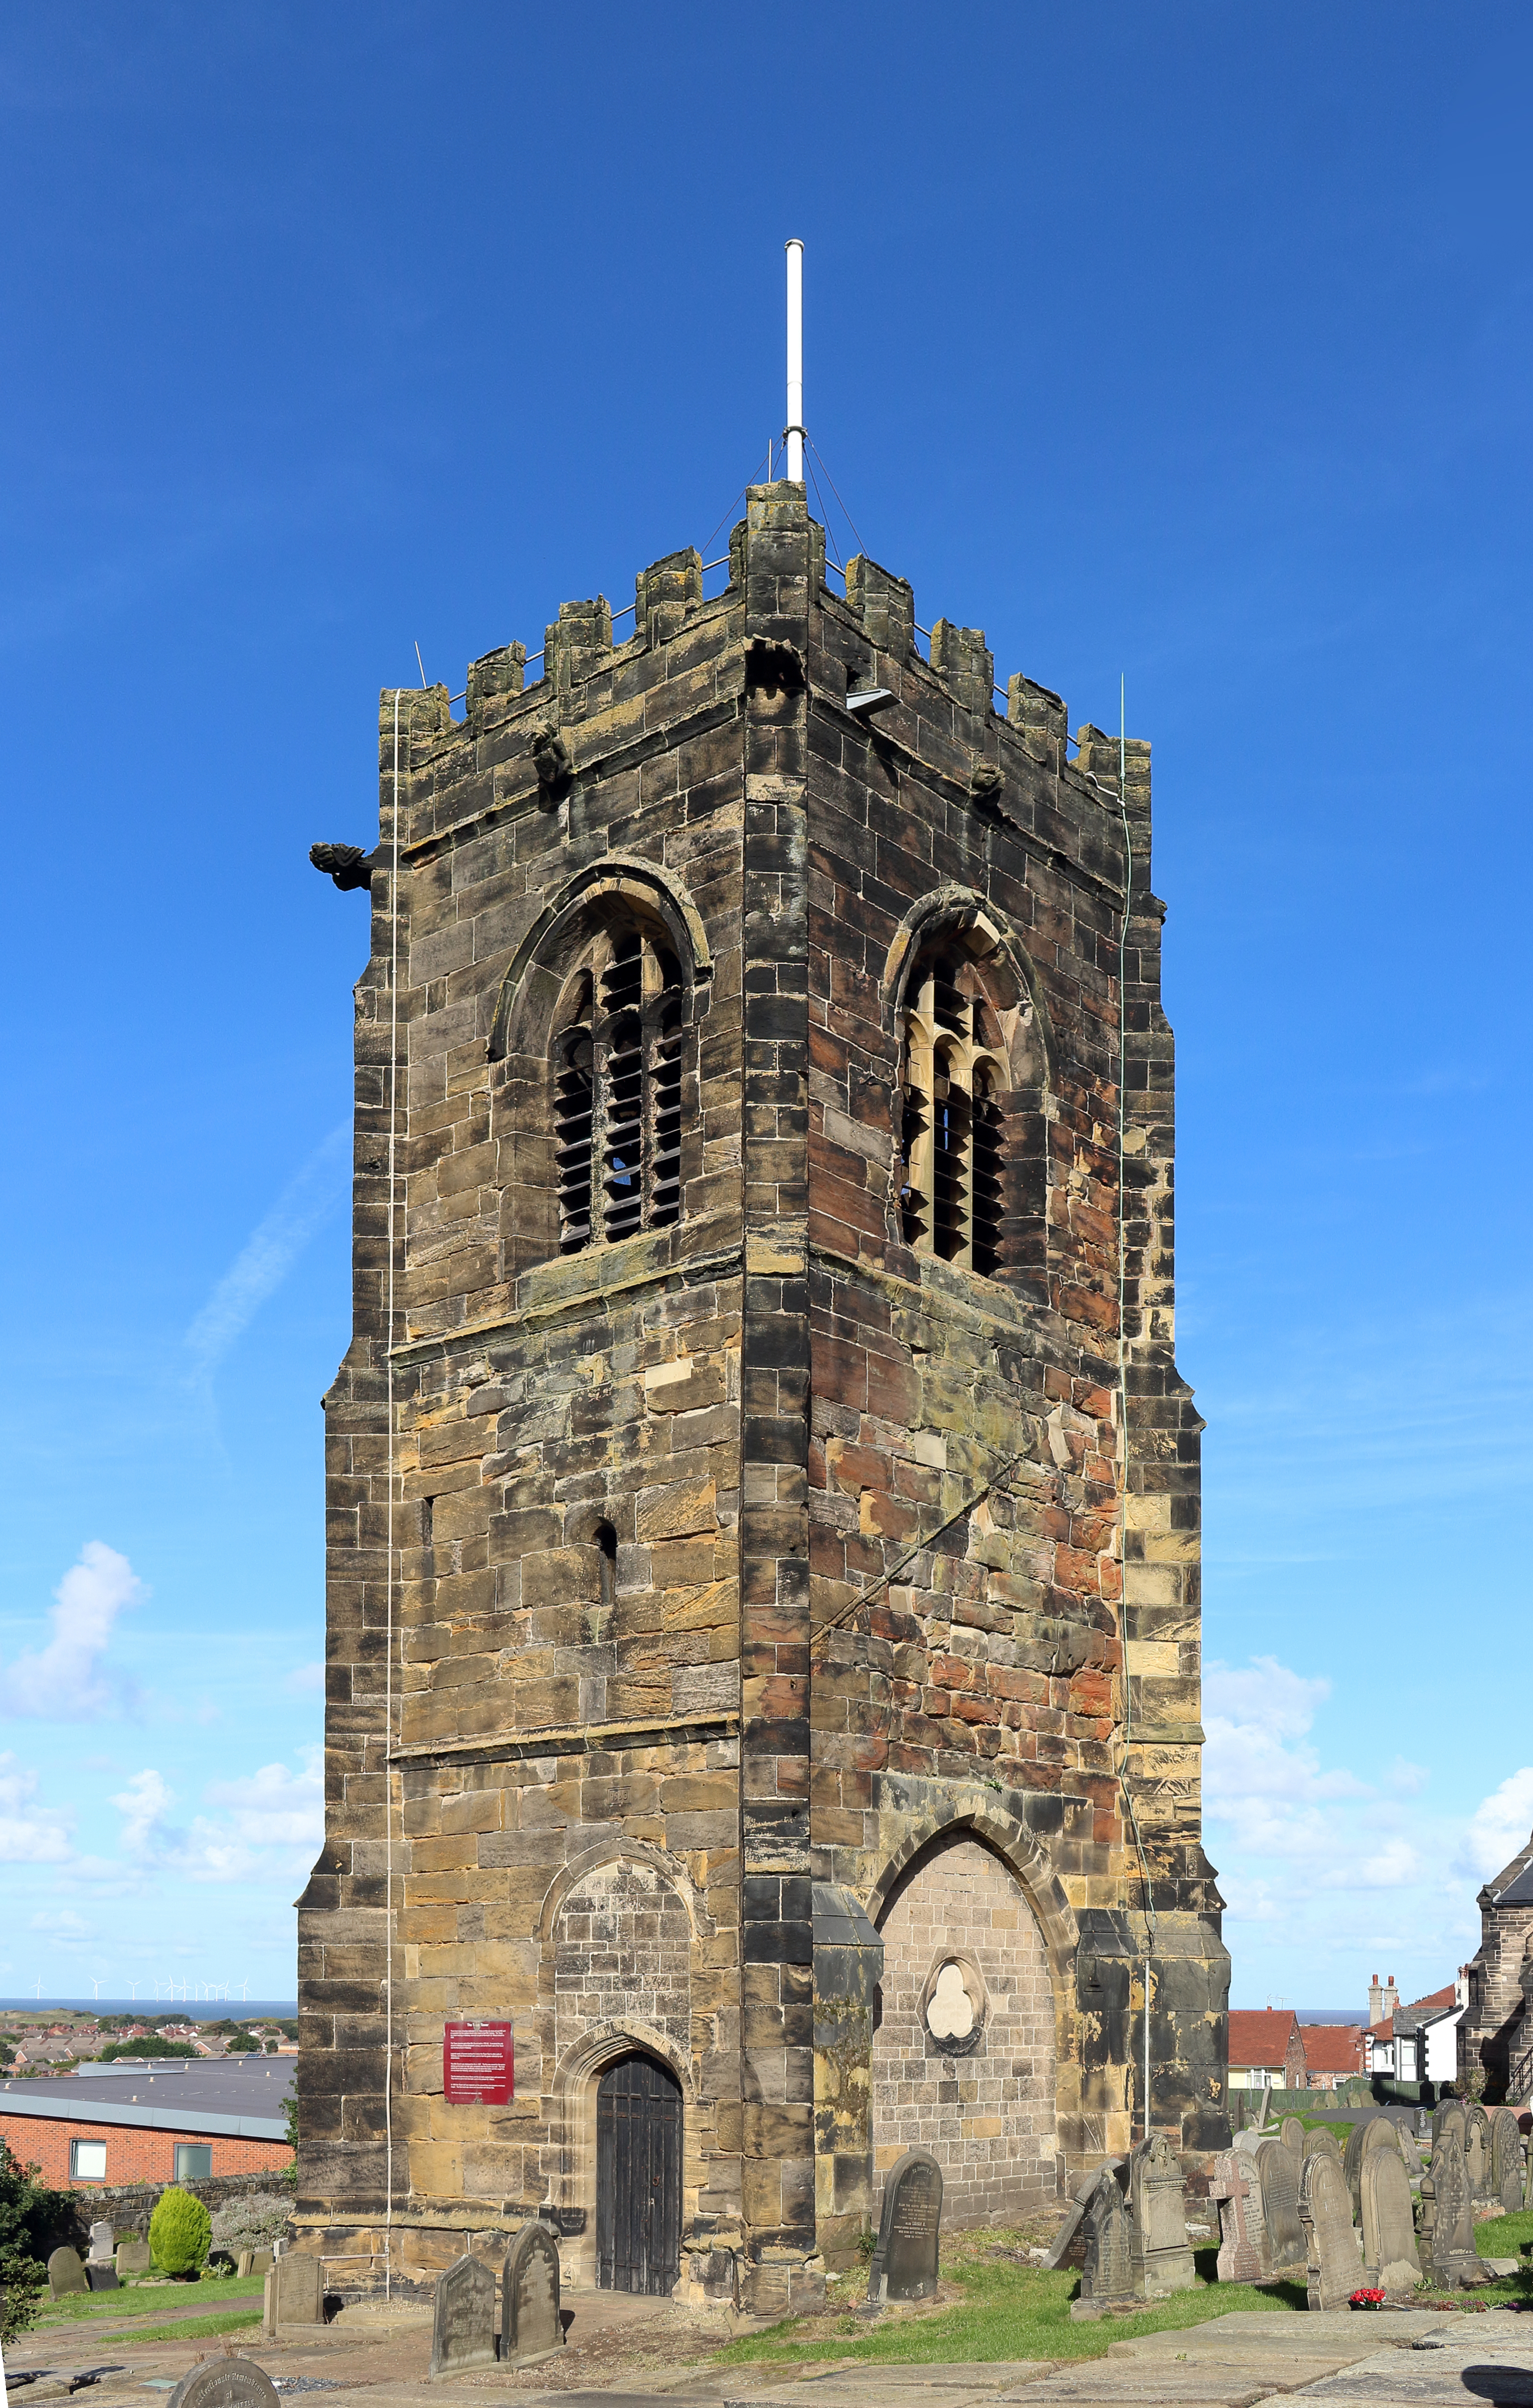 Tudor tower, St Hilary's church, Wallasey